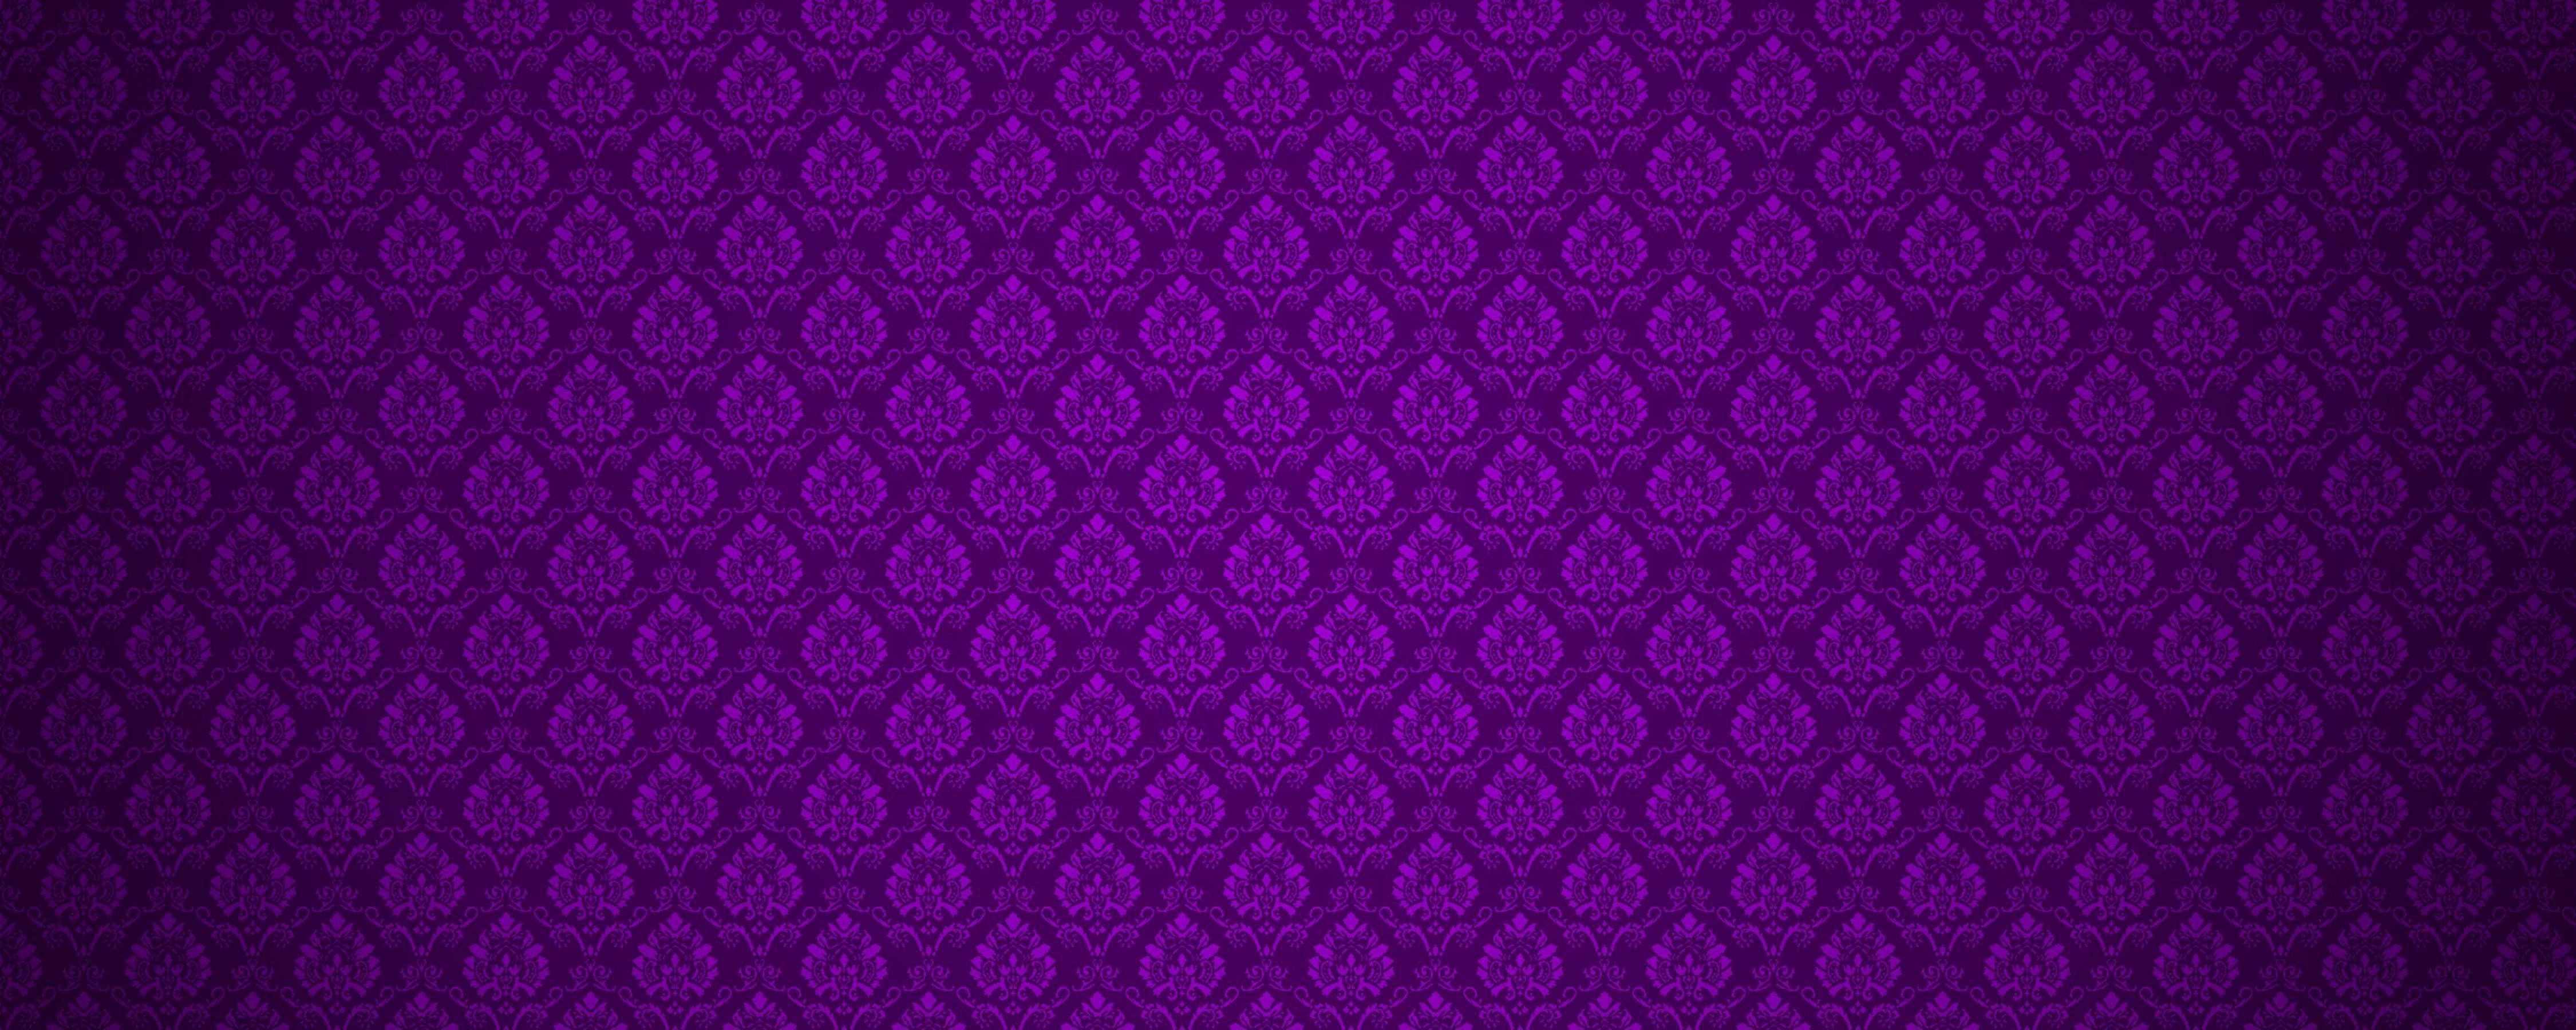 Purple pattern Wallpaper. High Quality Wallpaper